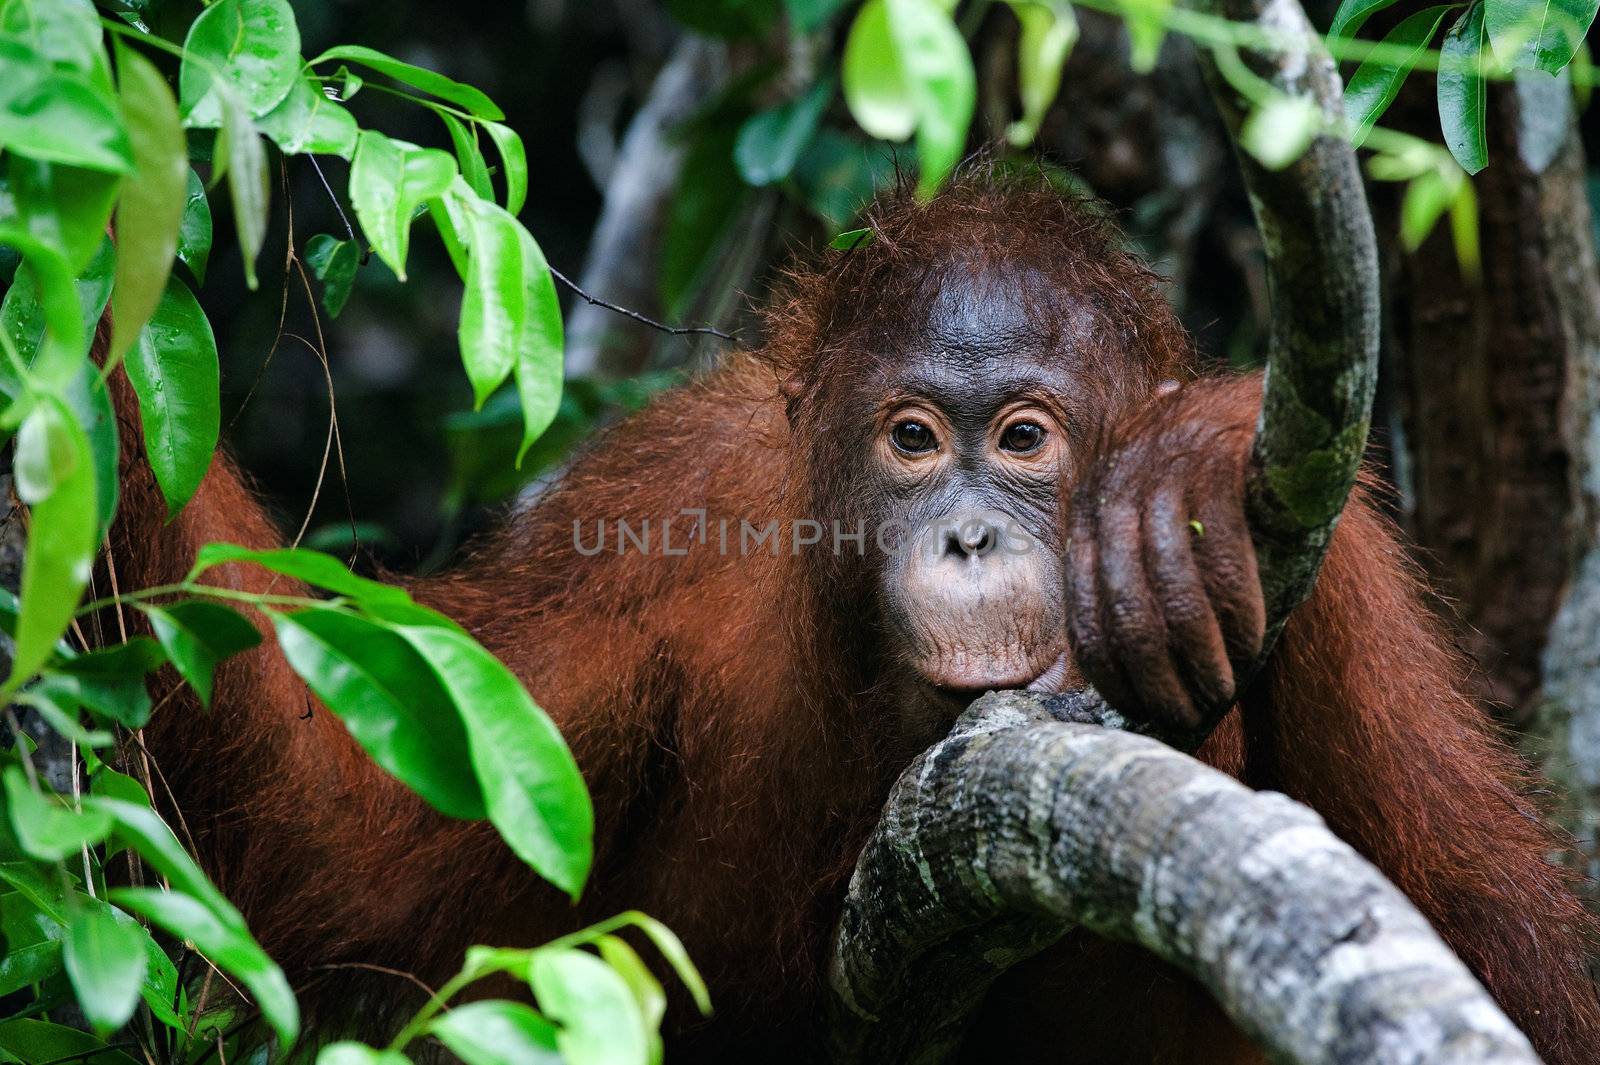 Indonesia, Borneo - Little Orangutan sitting in the trees